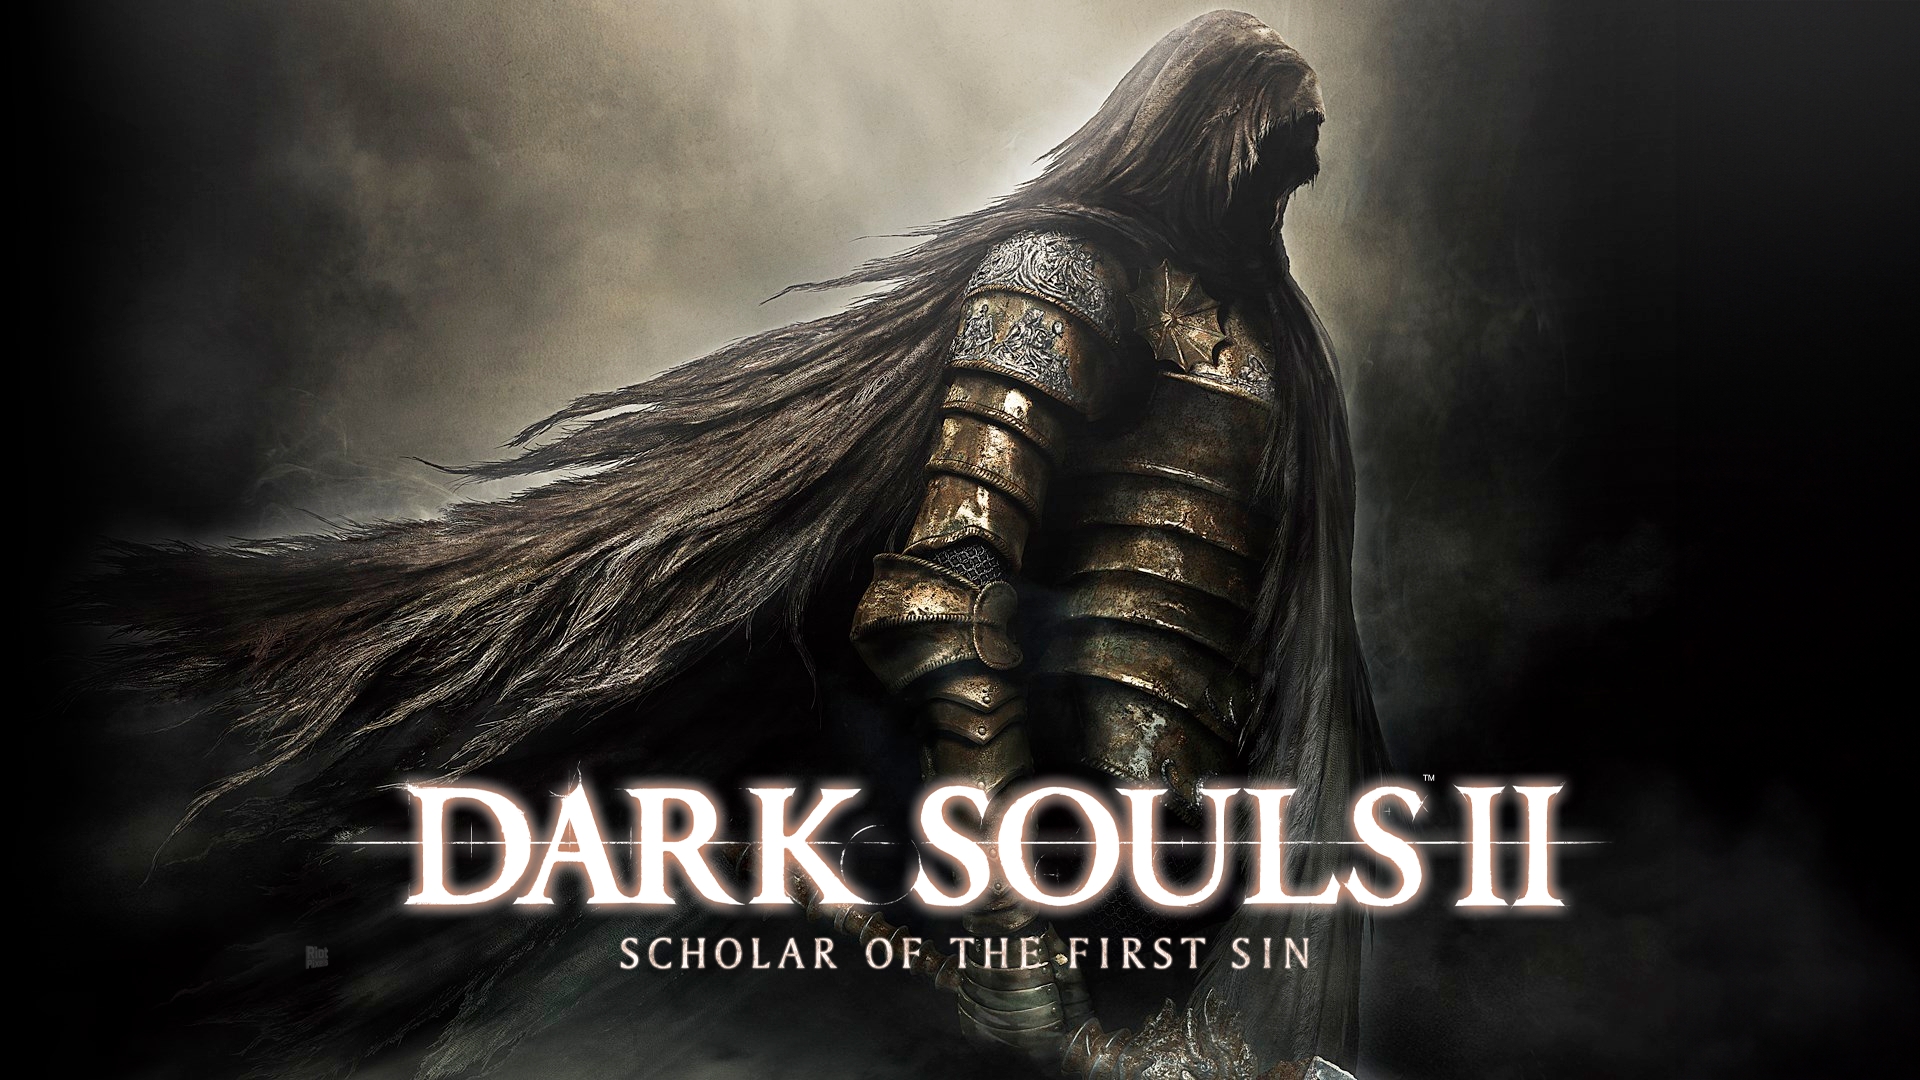 Buy PlayStation 3 Dark Souls II: Scholar of the First Sin